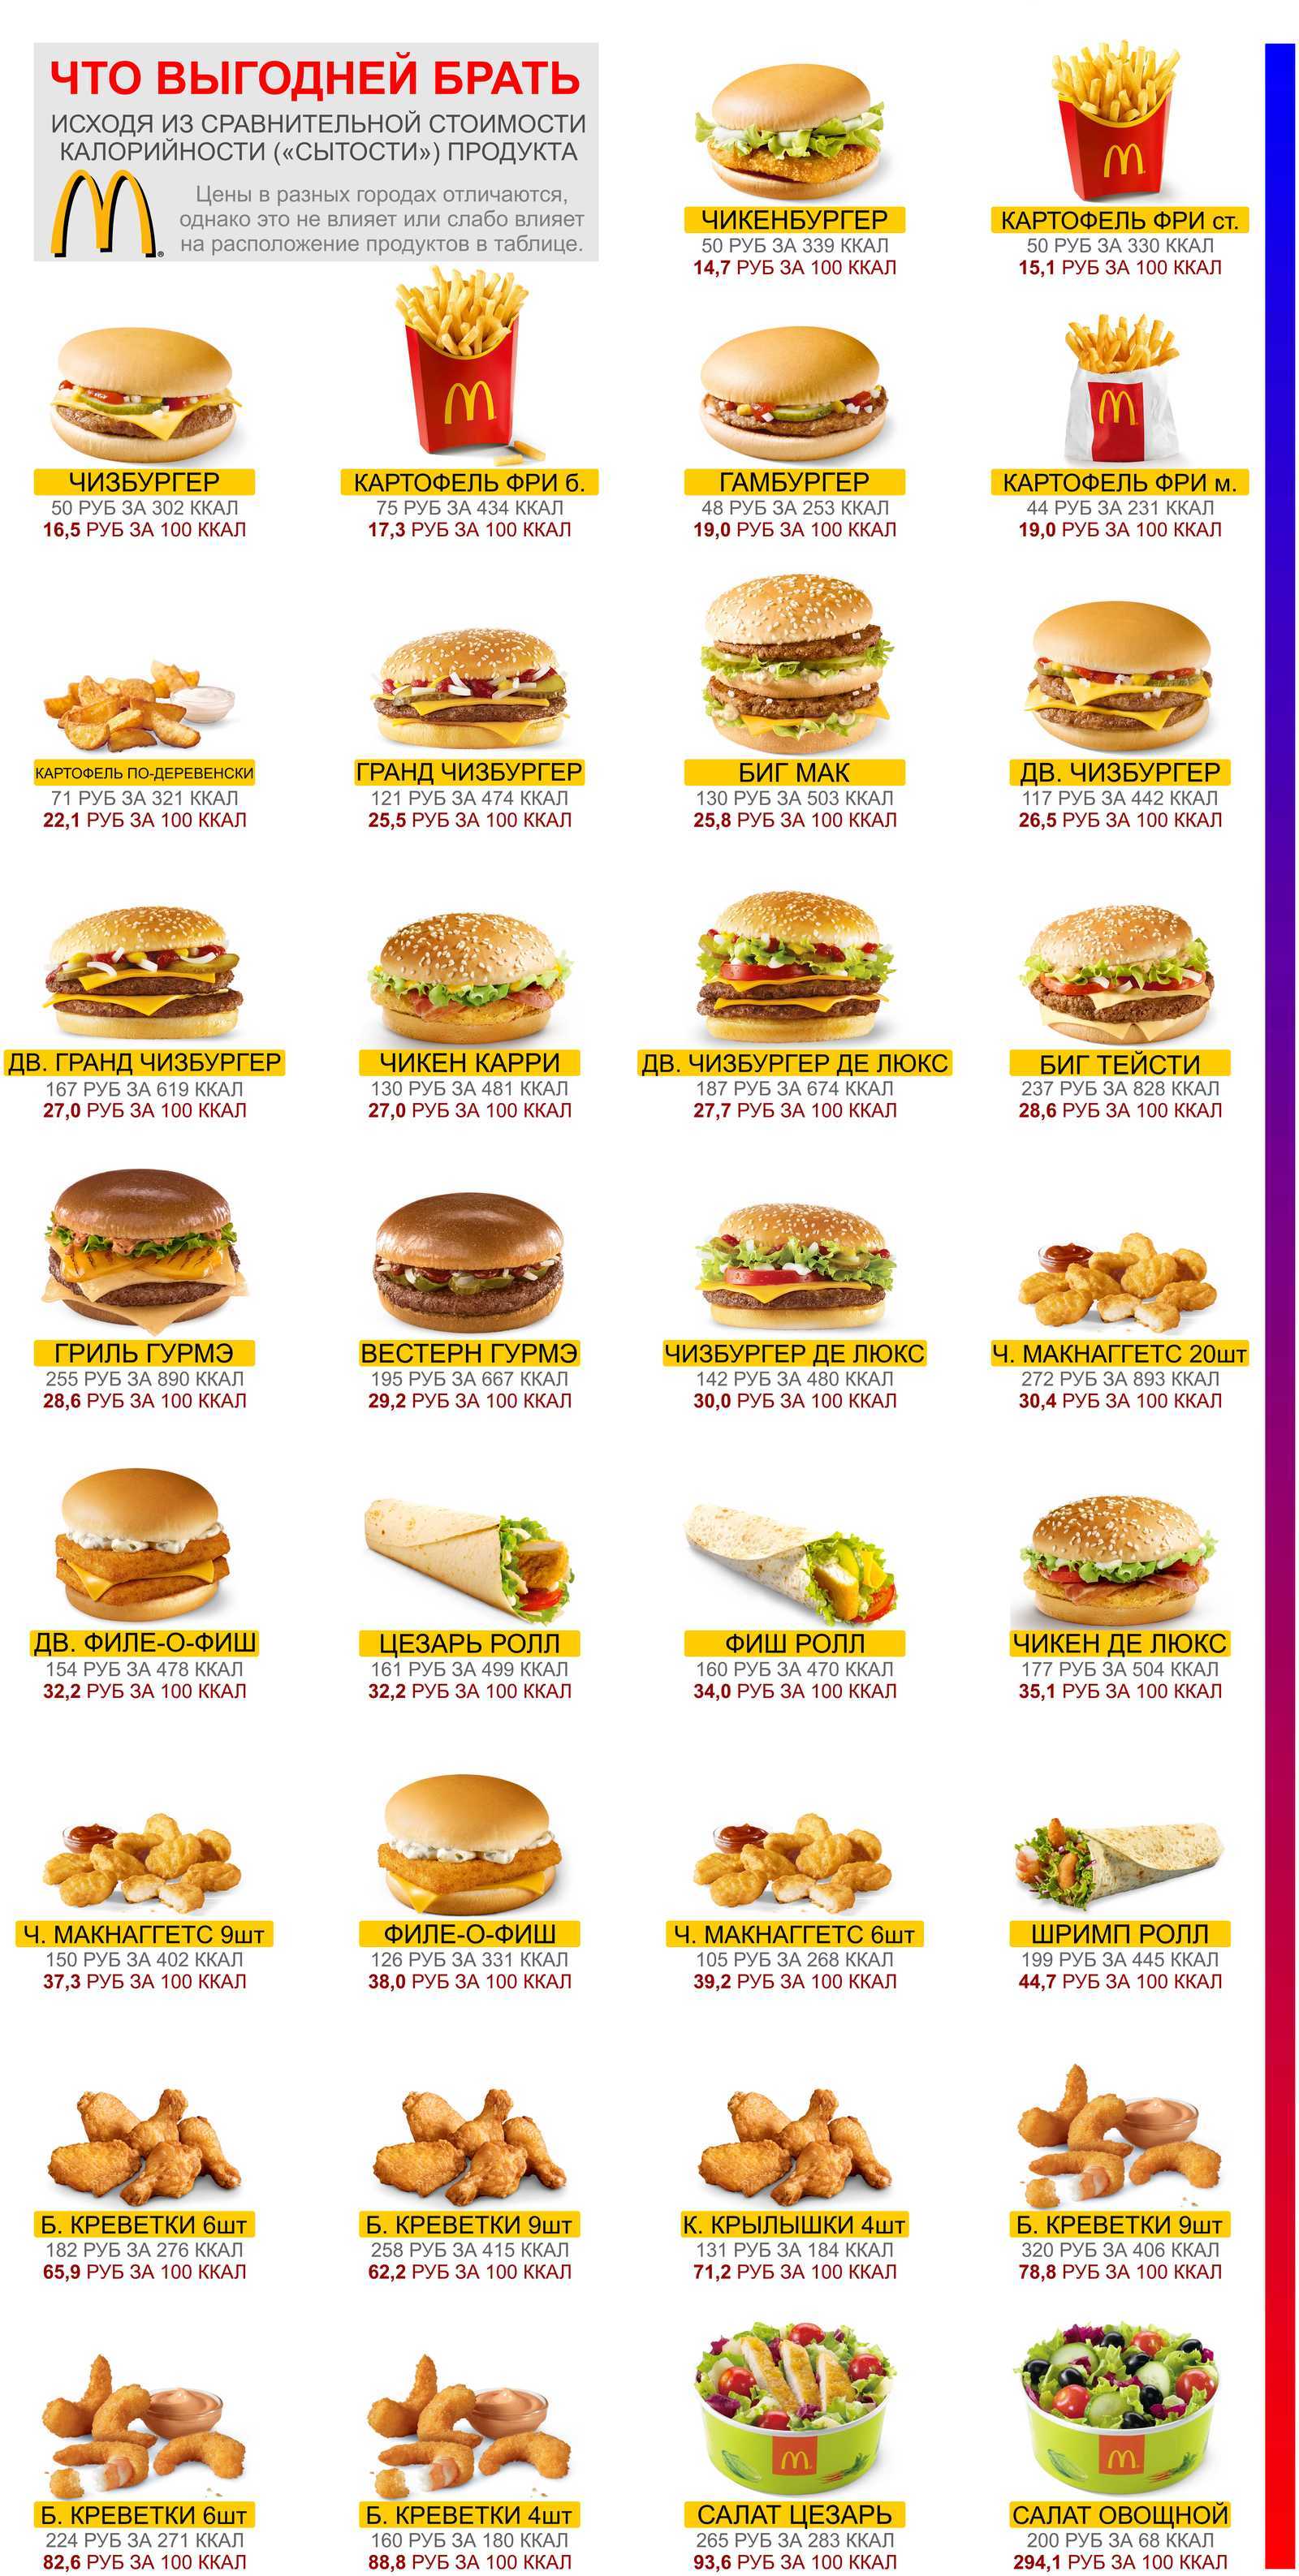 Чизбургер макдональдс калории. Бургеры макдональдс калорийность. Чизбургер макдональдс ка. Калорийность продуктов макдональдс 2021. Макдональдс калории калорийность блюд.